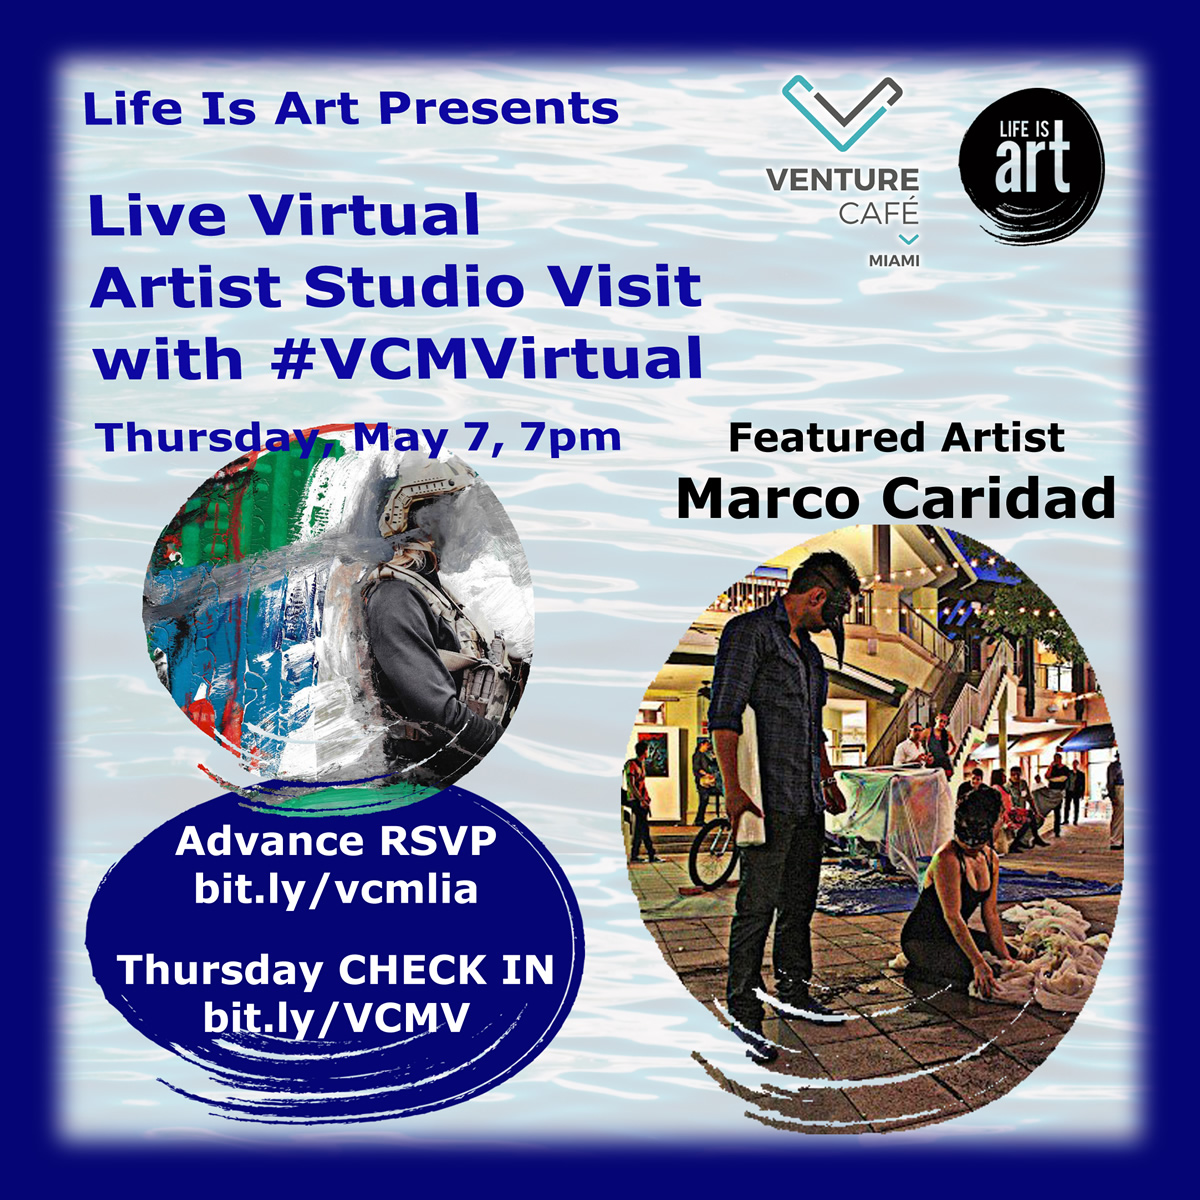 EVENT #135 Live Virtual Artist Studio Visits w/ VCMVirtual f/ Marco Caridad on May 7, 2020